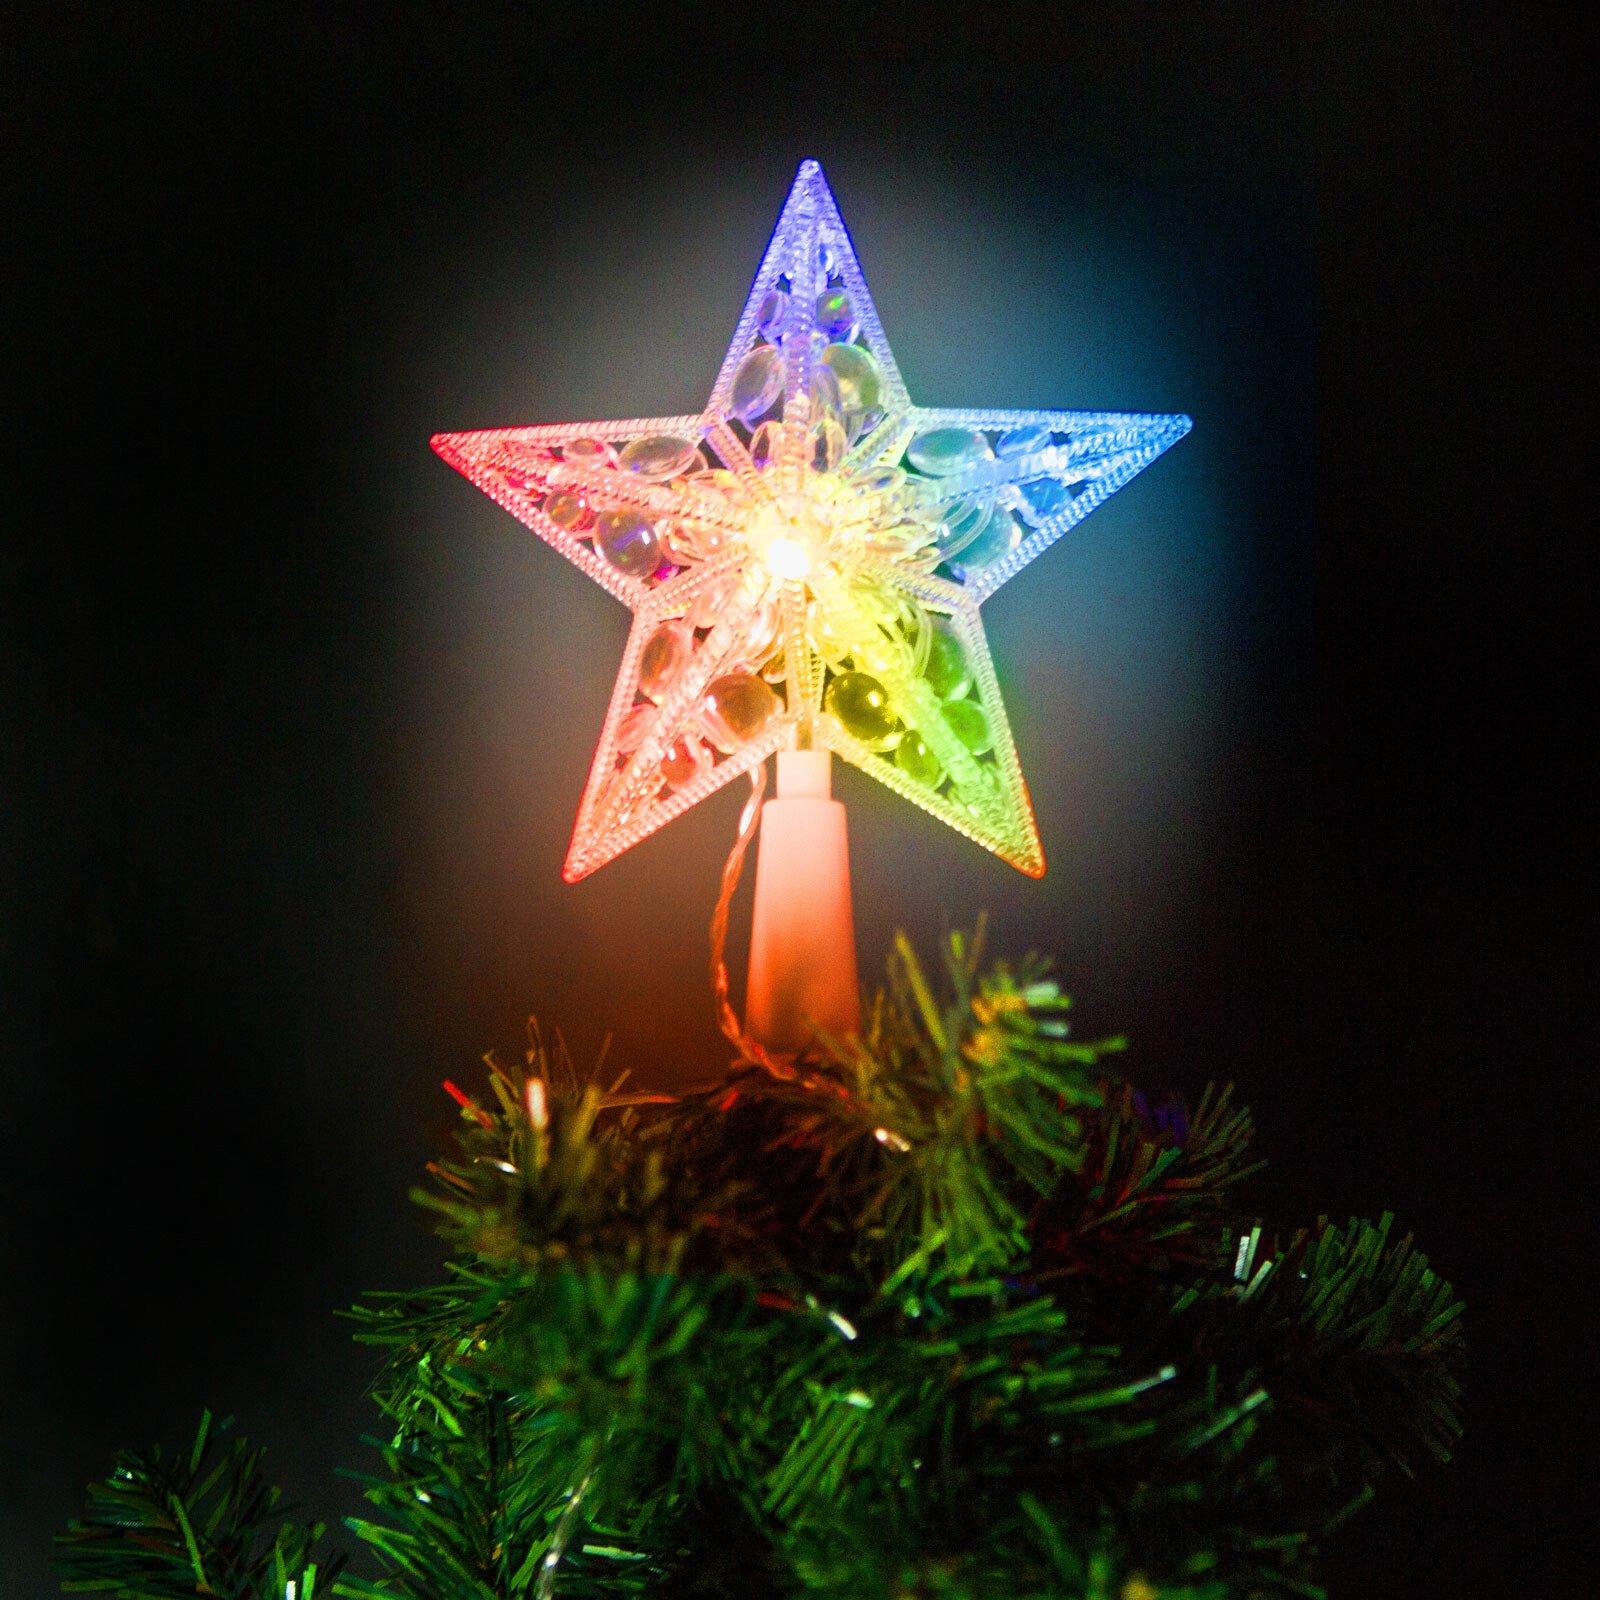 Christmas tree LED star peak decoration - 10 LEDs - 15 cm - RGB - 2 x AA thumb